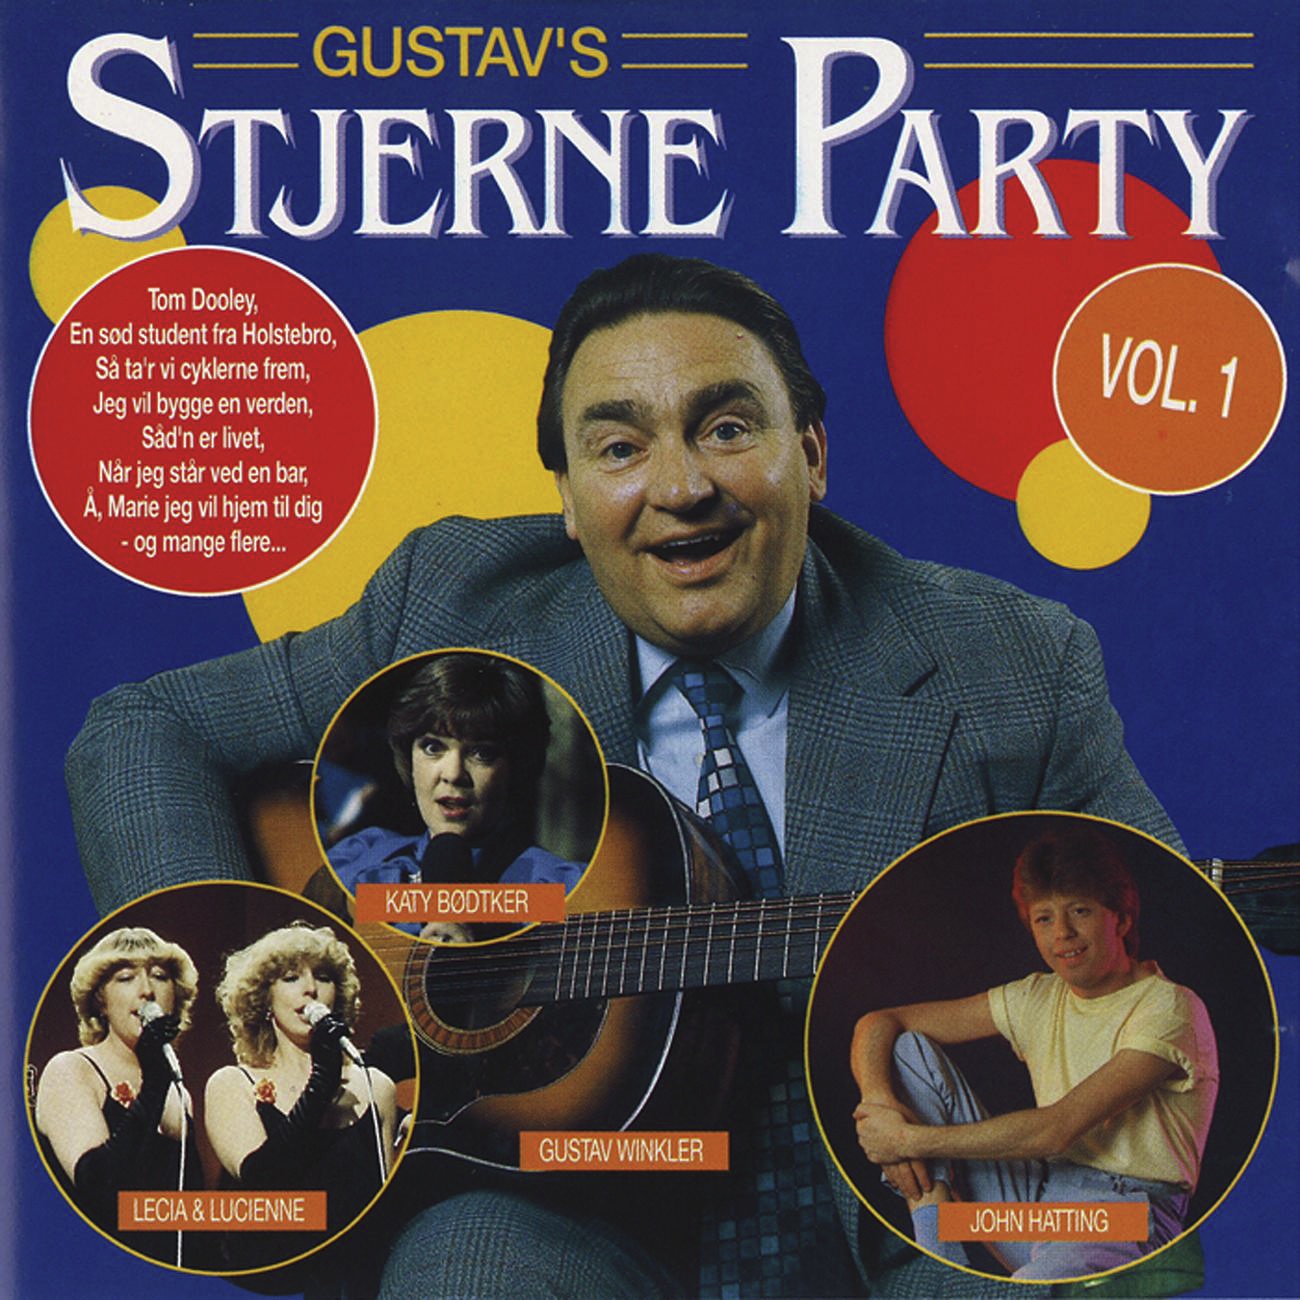 Gustavs Stjerne Party Vol. 1